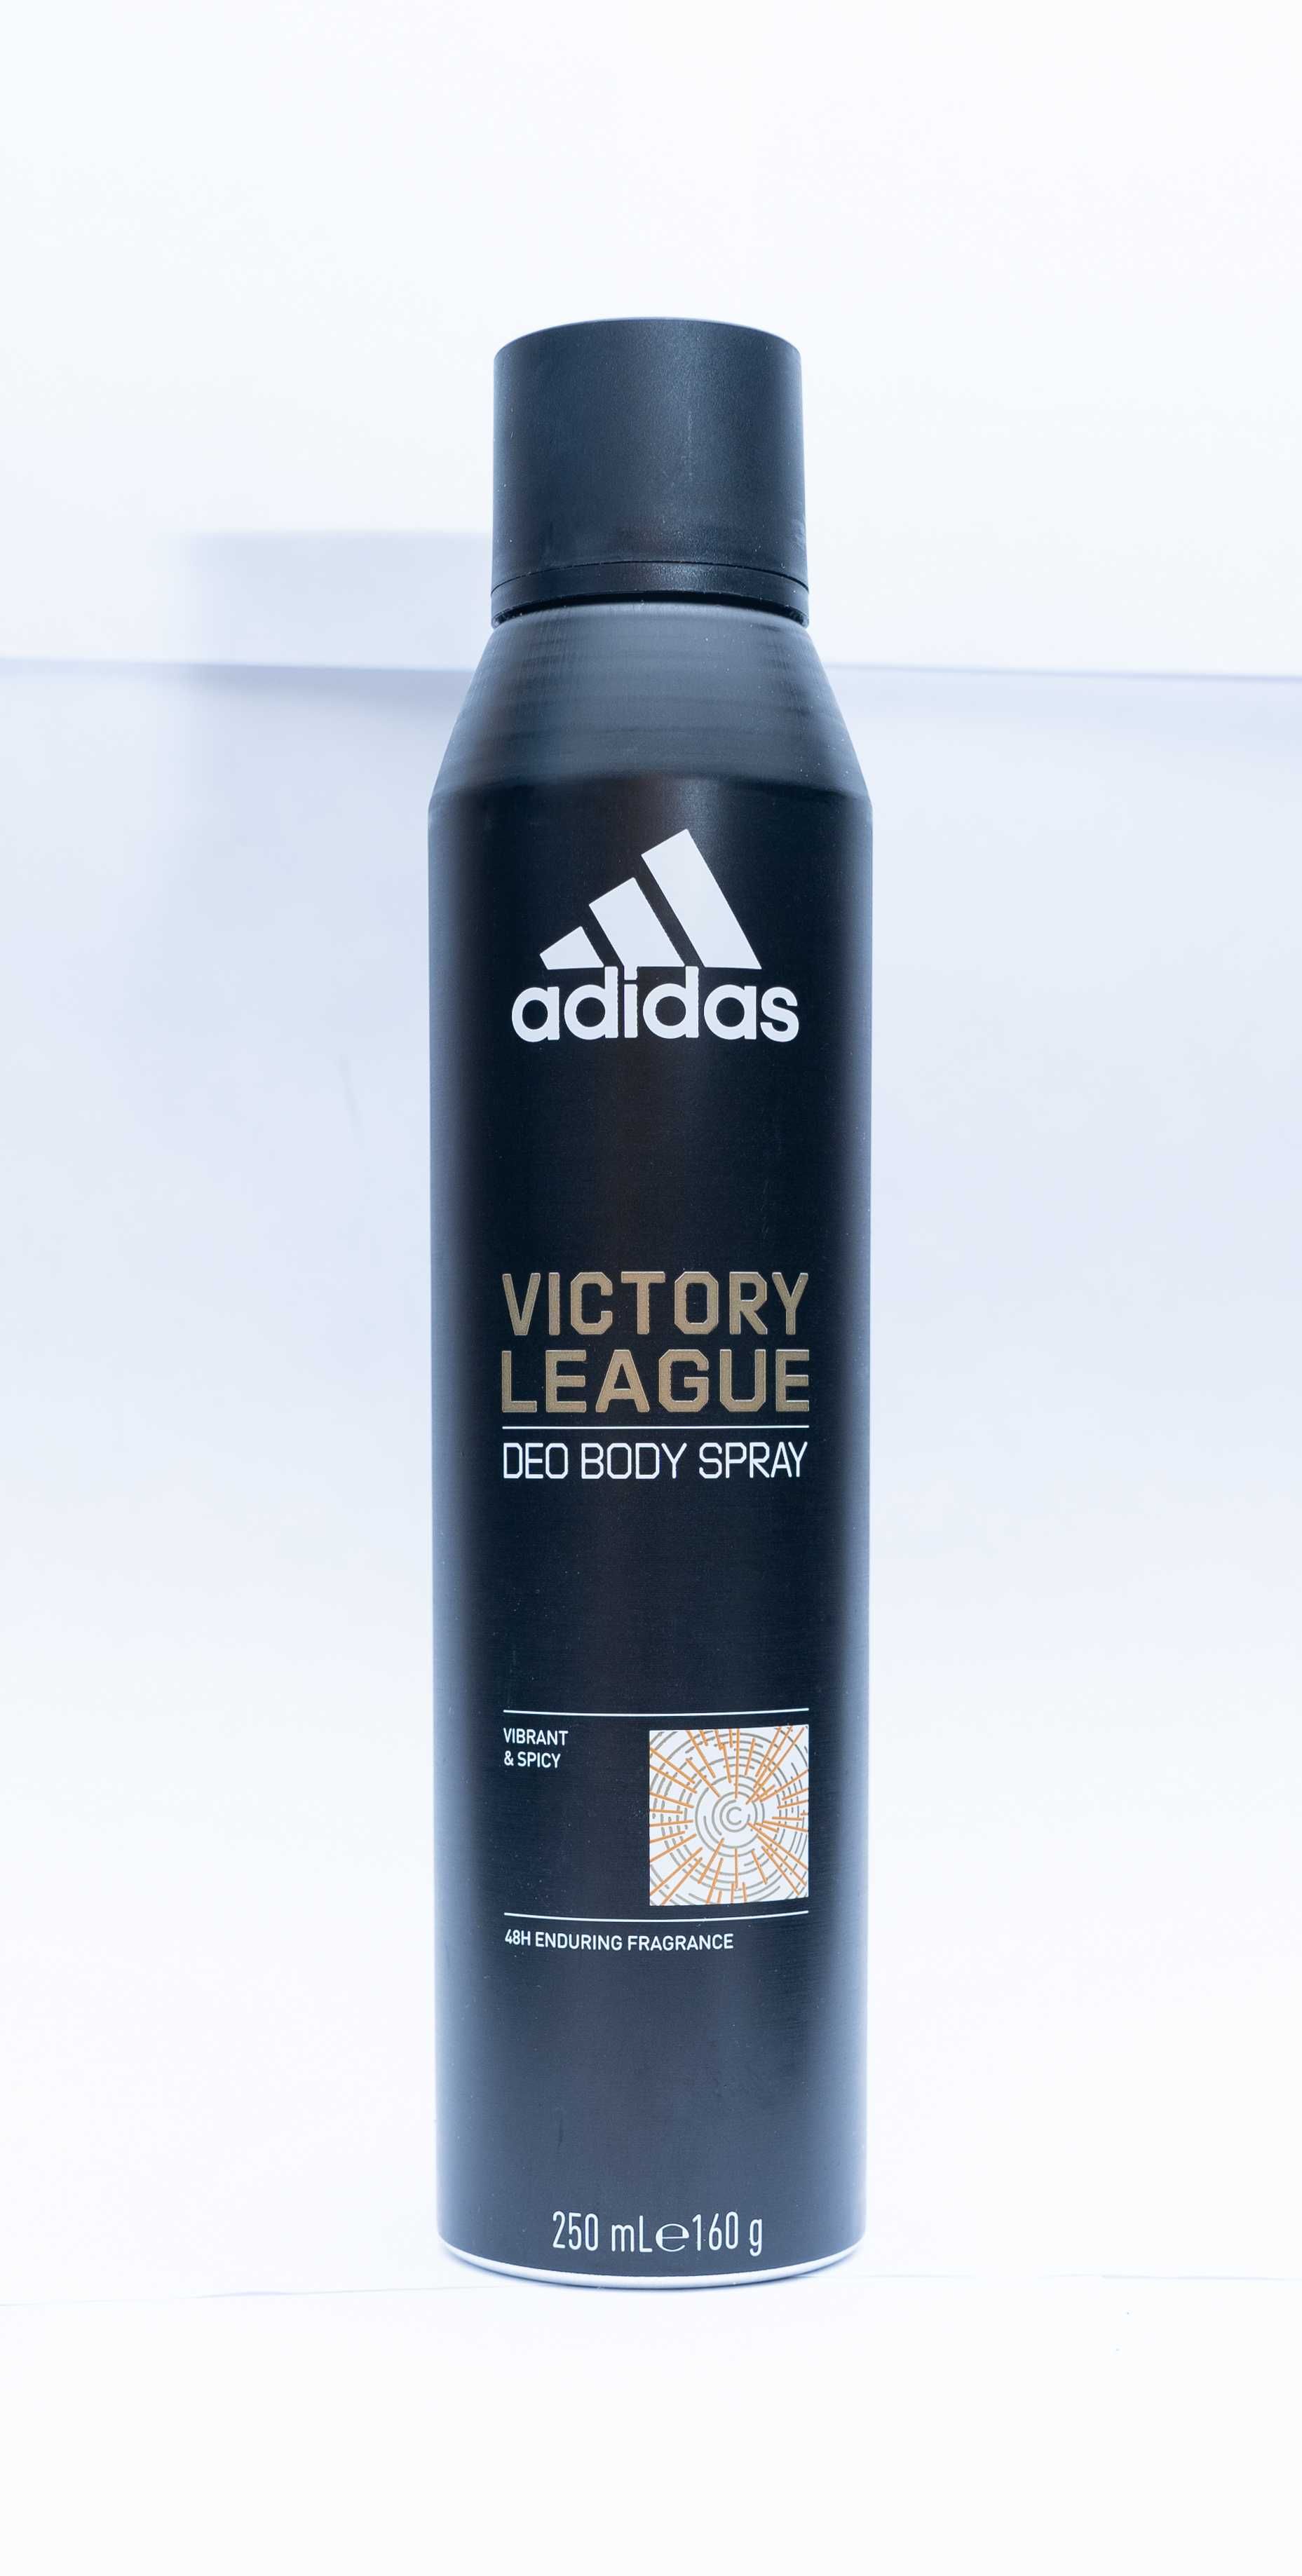 Dezodorant Adidas Victory League 250 ml mililitrów